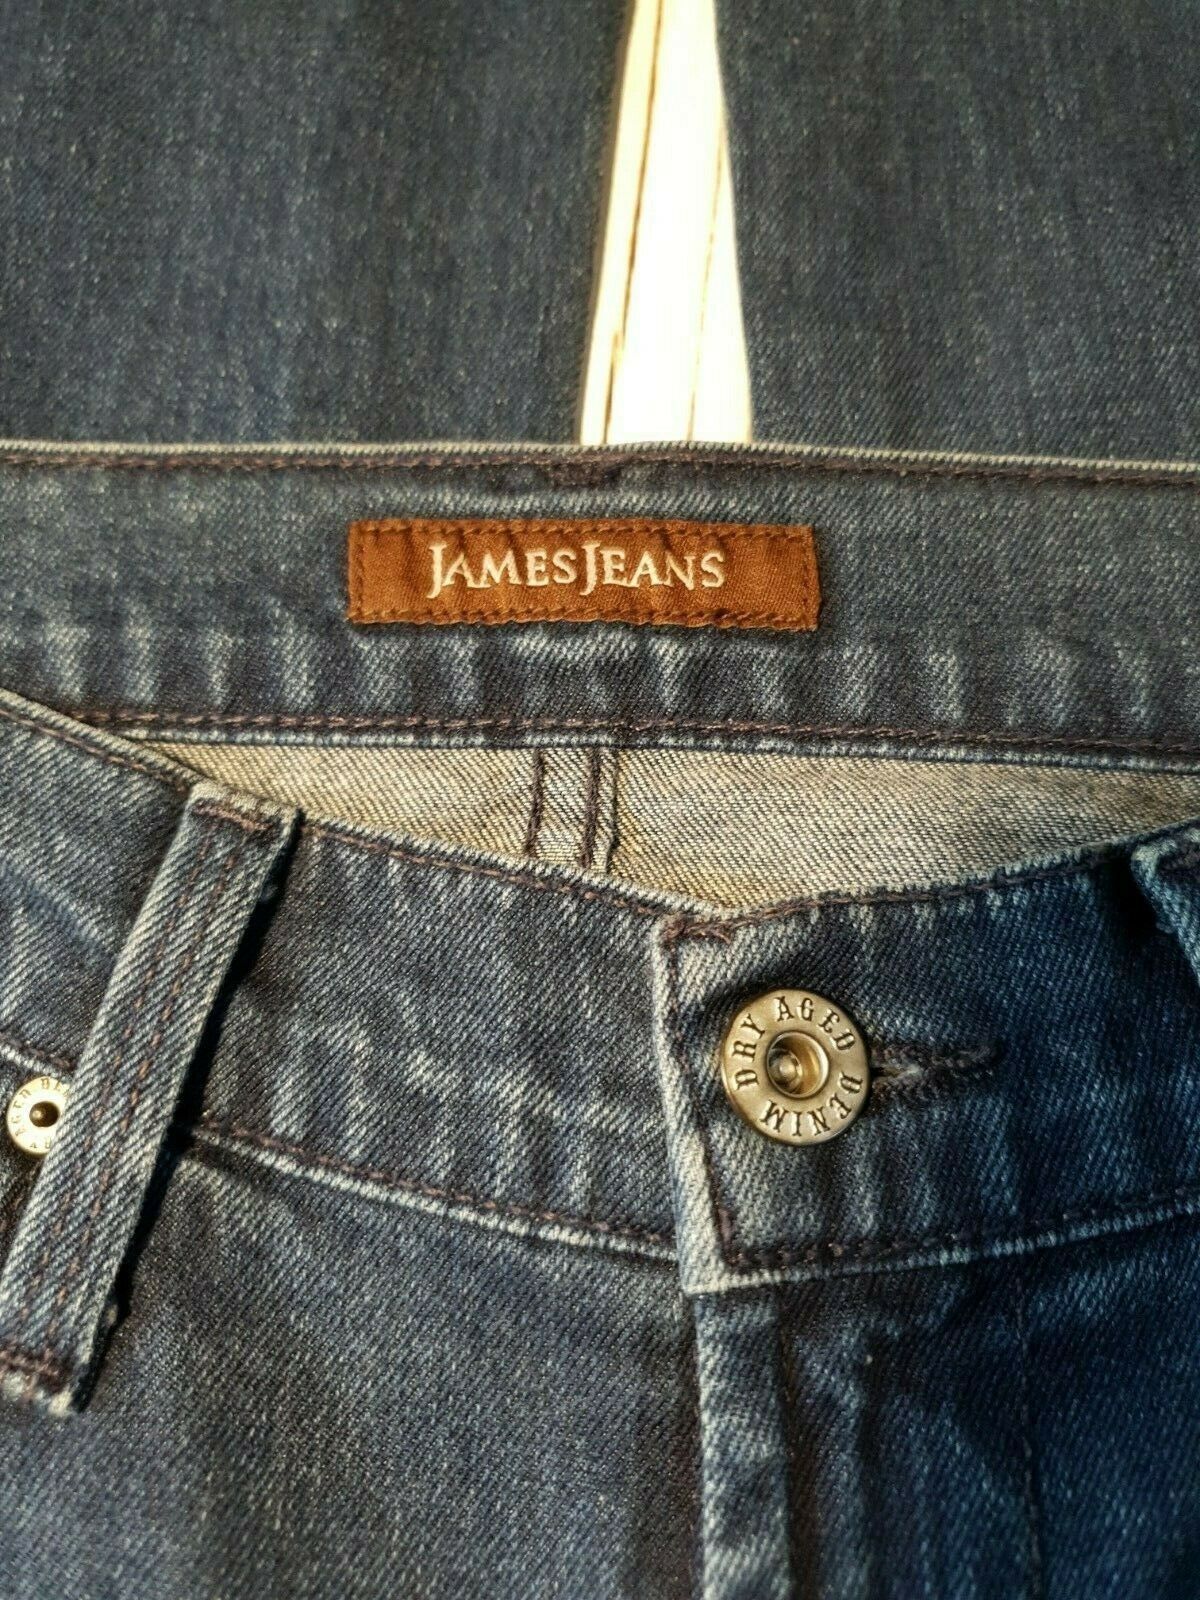 James Jeans Nostalgia Reboot Skinny Bootcut Jeans UK 8 US 4 EU 36 RRP £195 Timeless Fashions